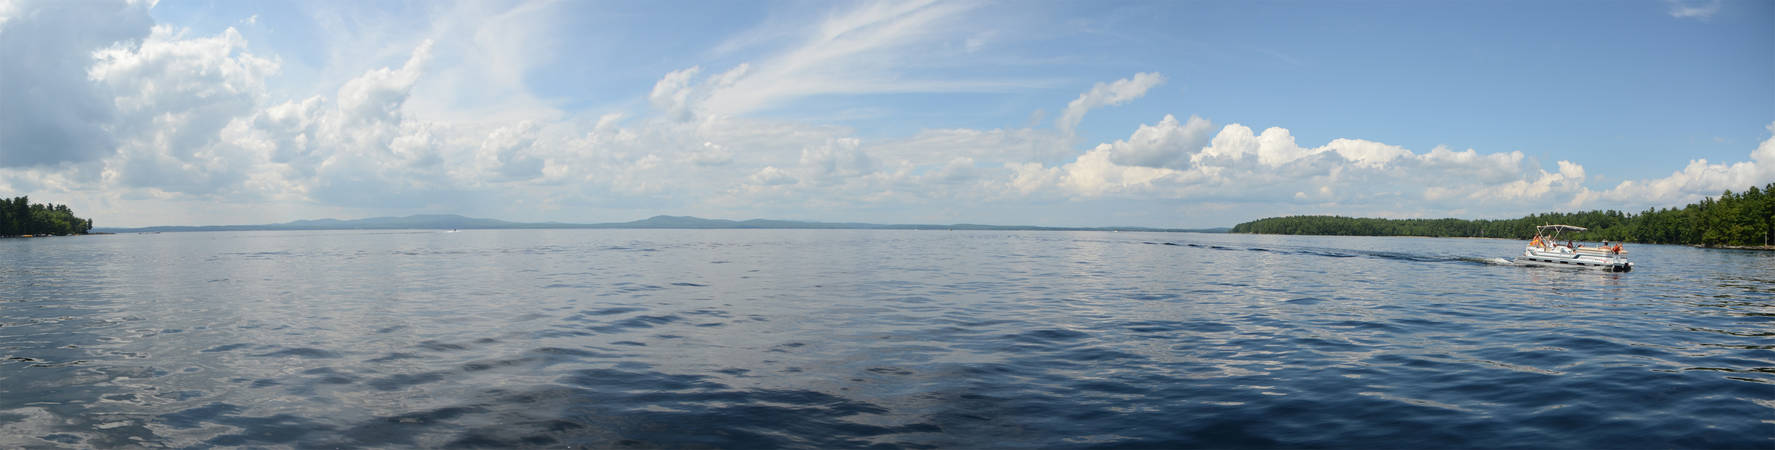 Sebago Lake 2012-08-13 1